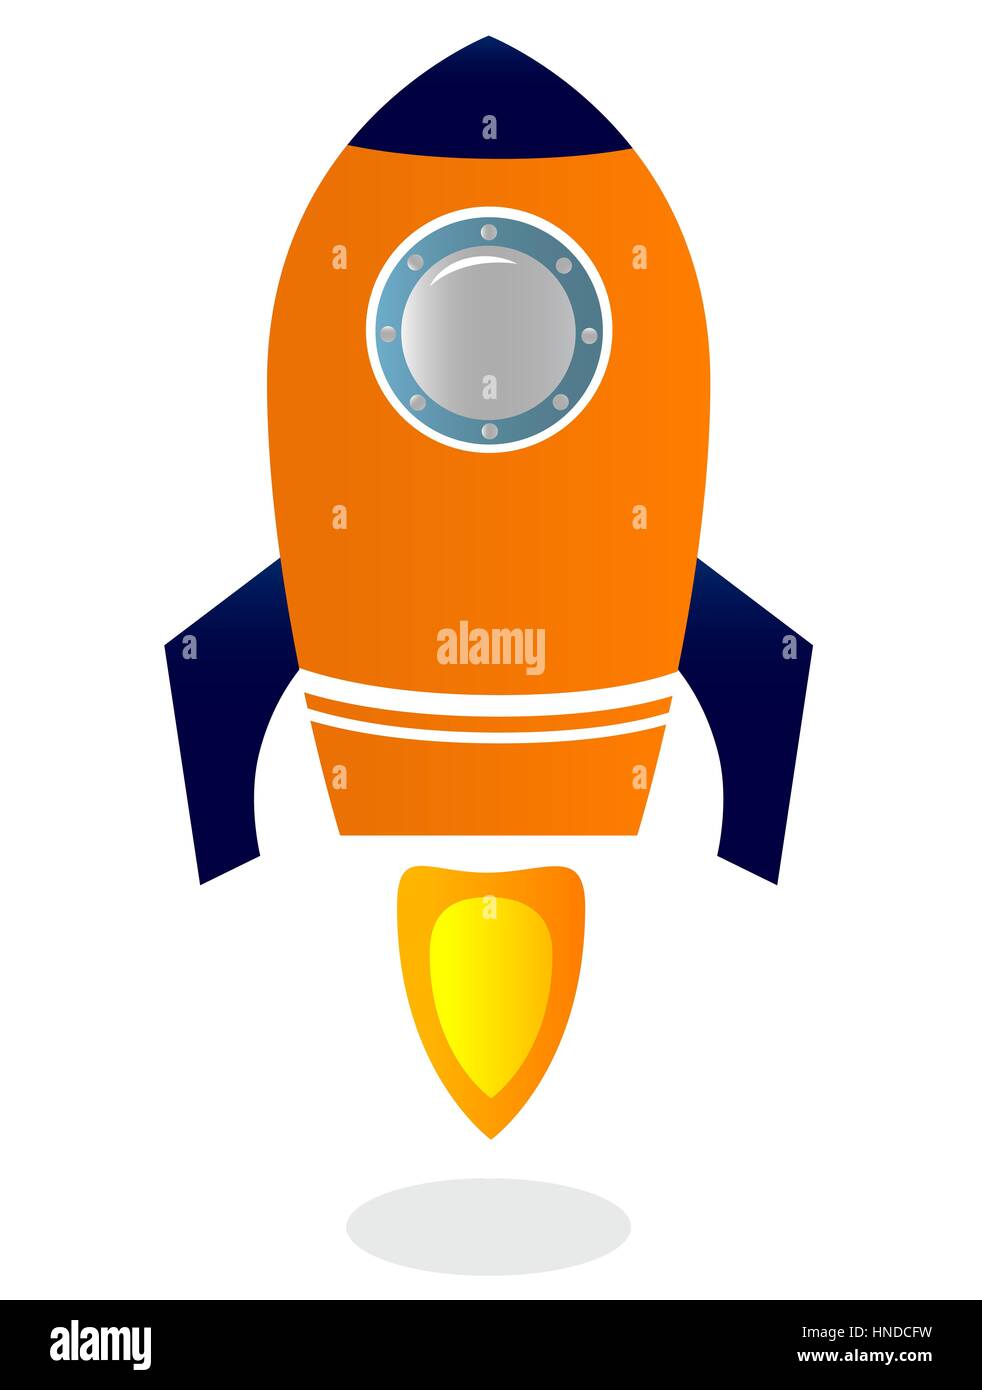 https://c8.alamy.com/comp/HNDCFW/stylized-rocket-ship-orange-little-kids-illustration-original-art-HNDCFW.jpg